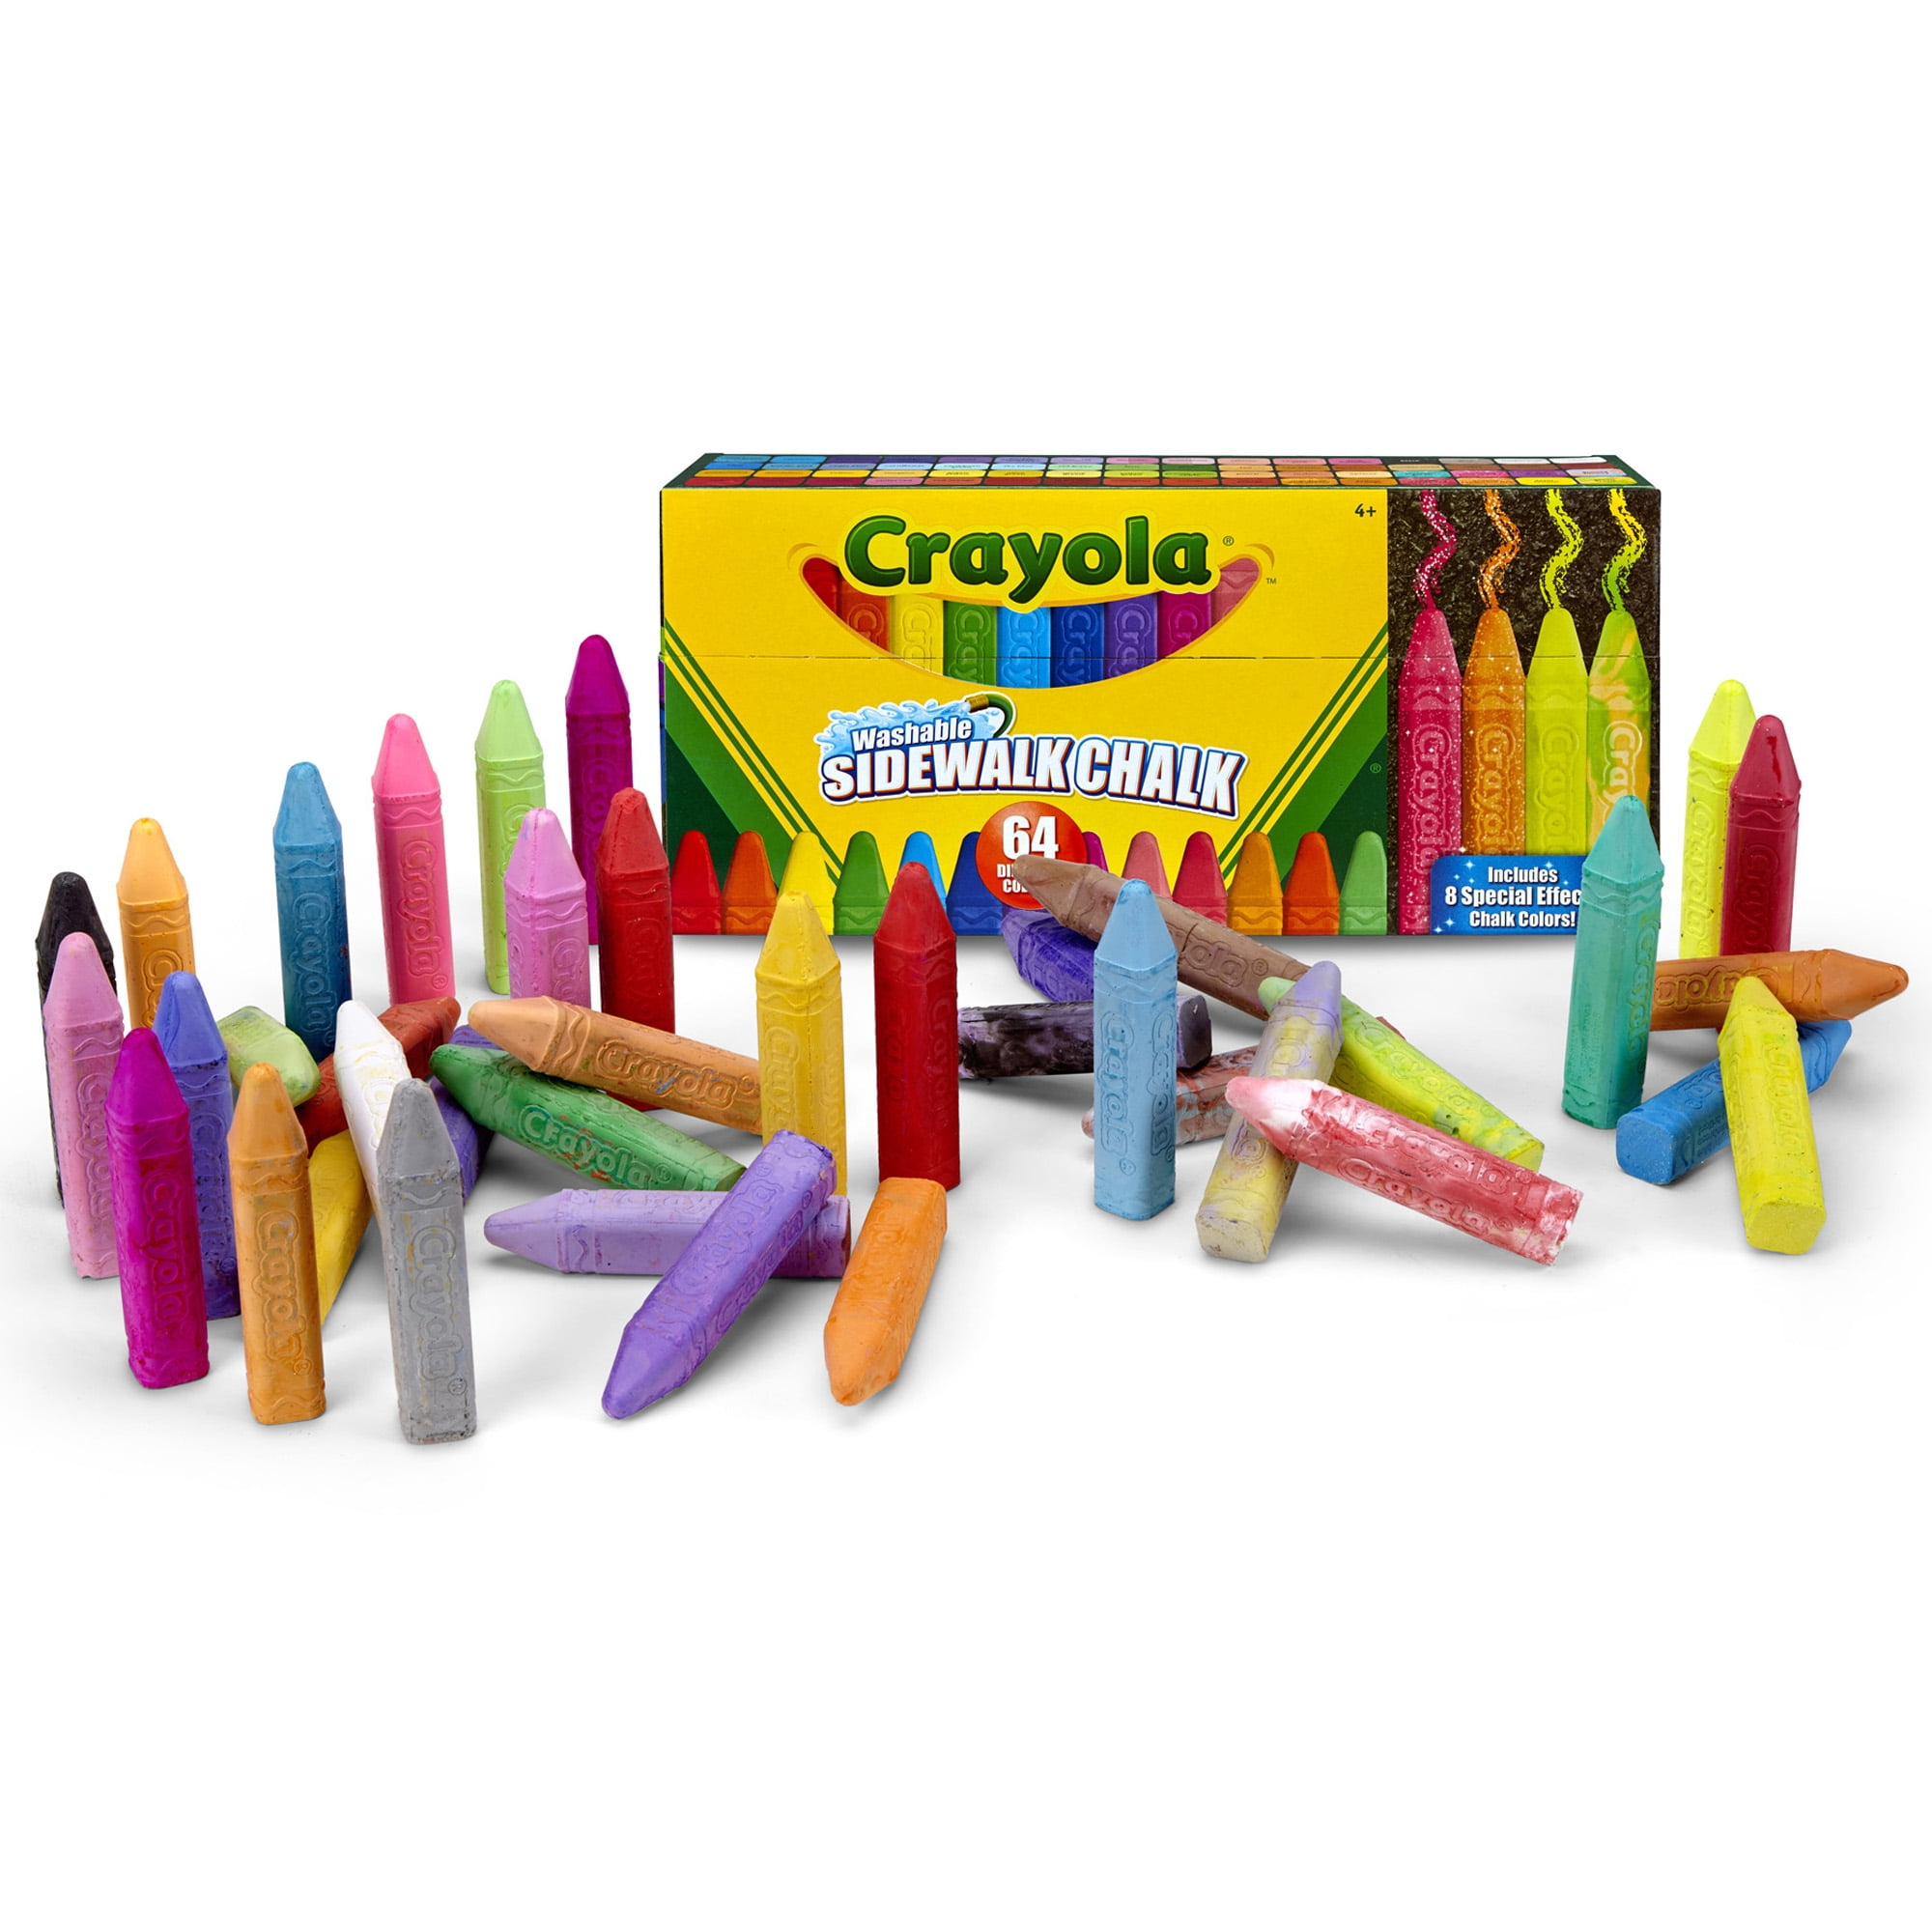 Crayola Ultimate Washable Chalk Collection (64ct), Bulk Sidewalk Chalk,  Outdoor Chalk for Kids, Anti-Roll Sticks, Nontoxic, 4+